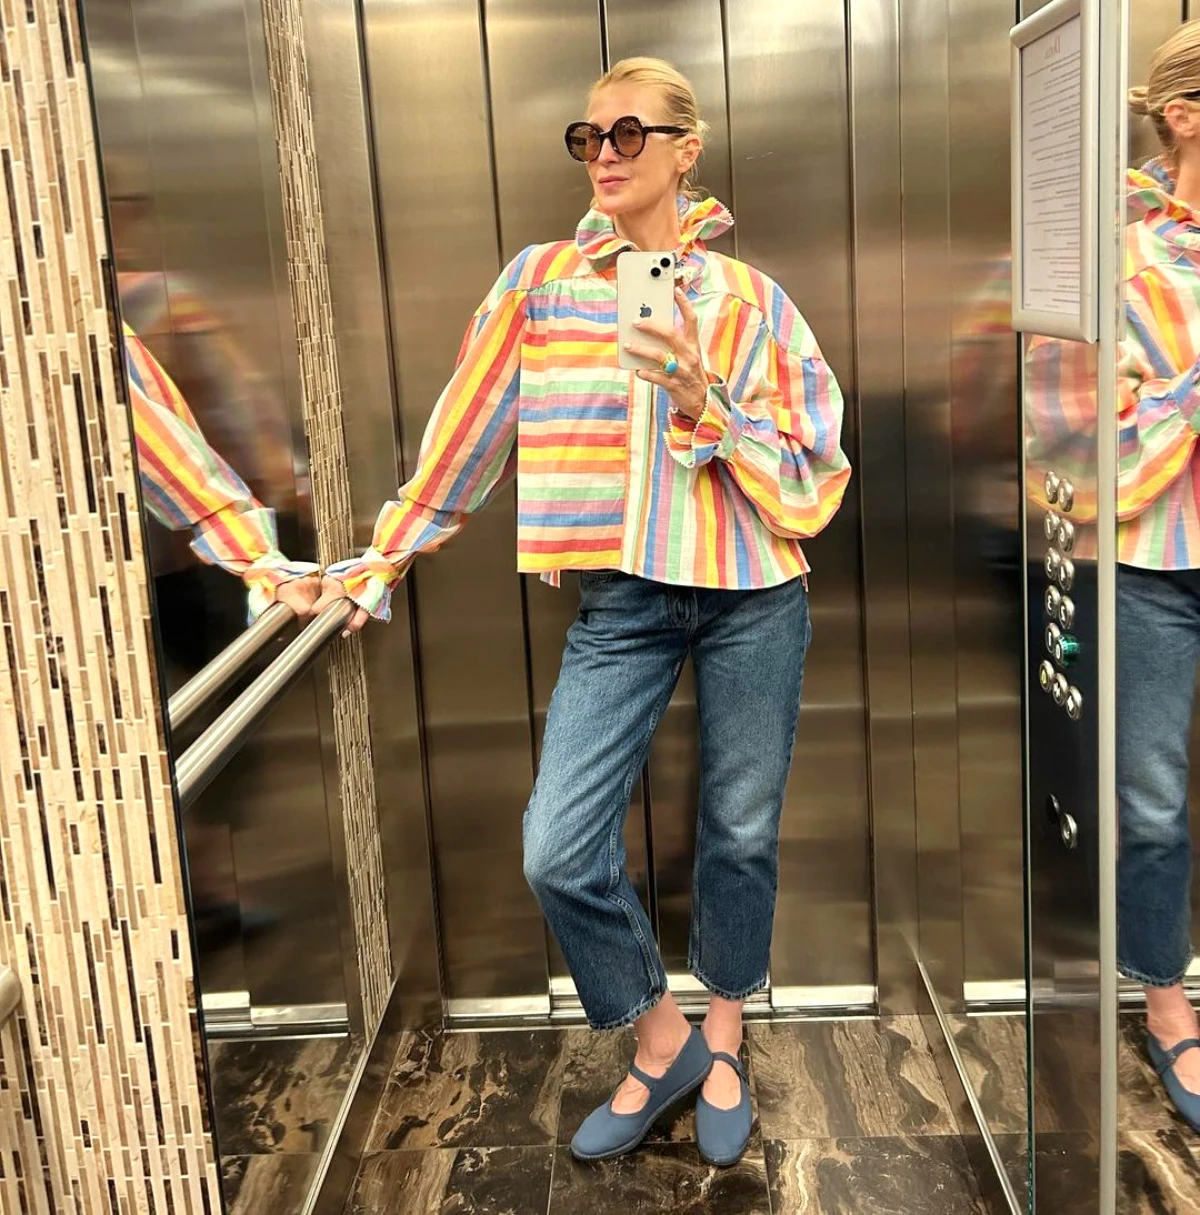 tenue tendance femme plus 50 ans chemise rayures verticales